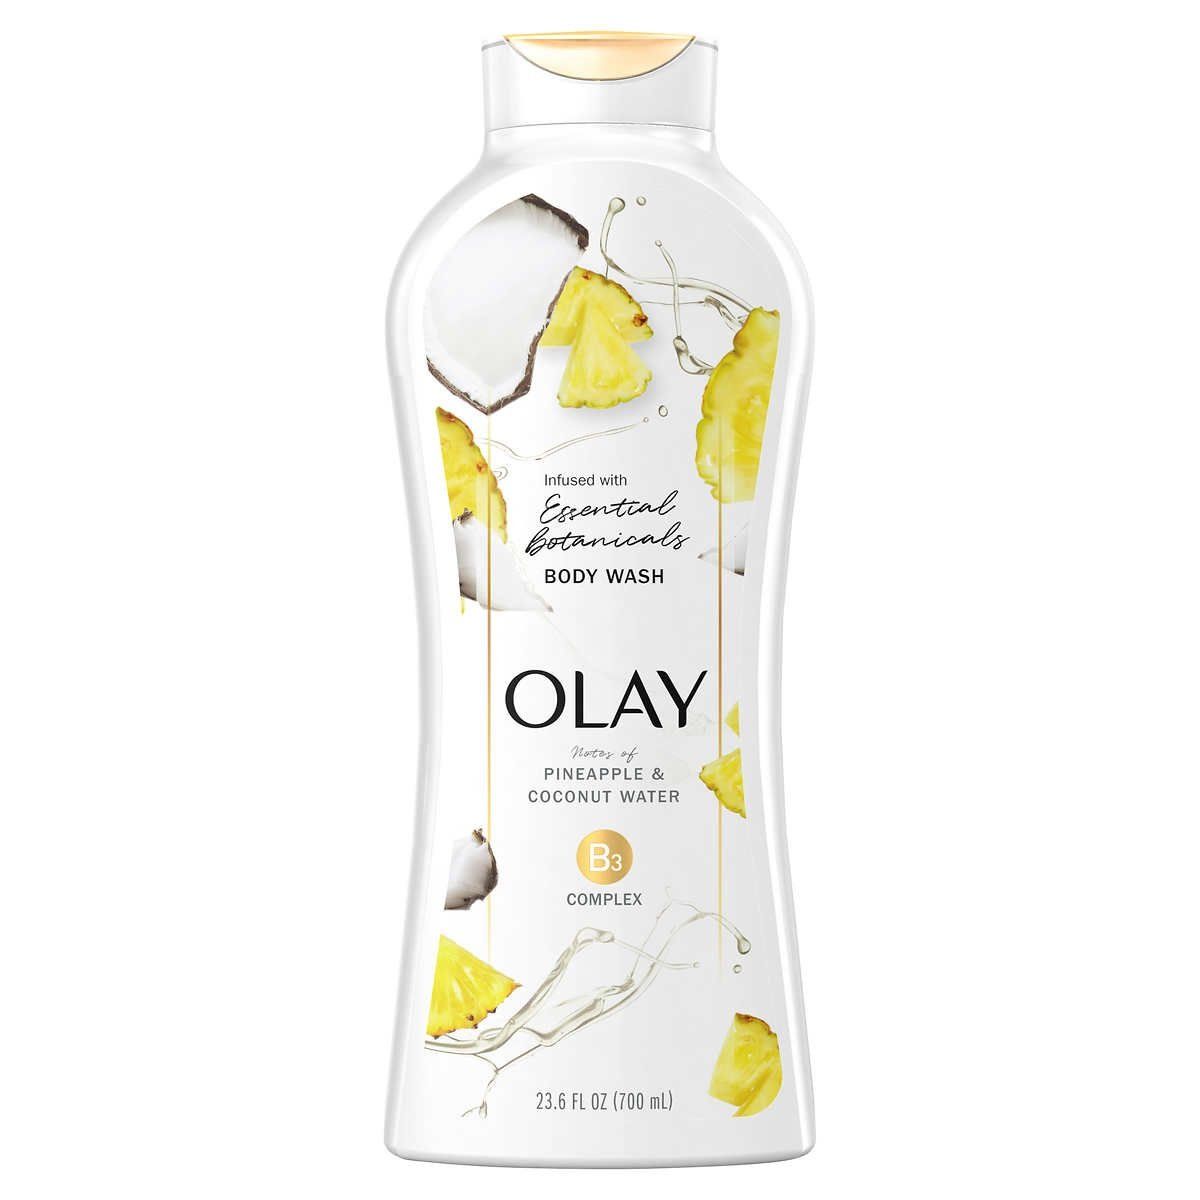  Sữa tắm Olay Essential Botanicals Body Wash B3 Complex Pineapple & Coconut Water 700ml 23.6Oz 